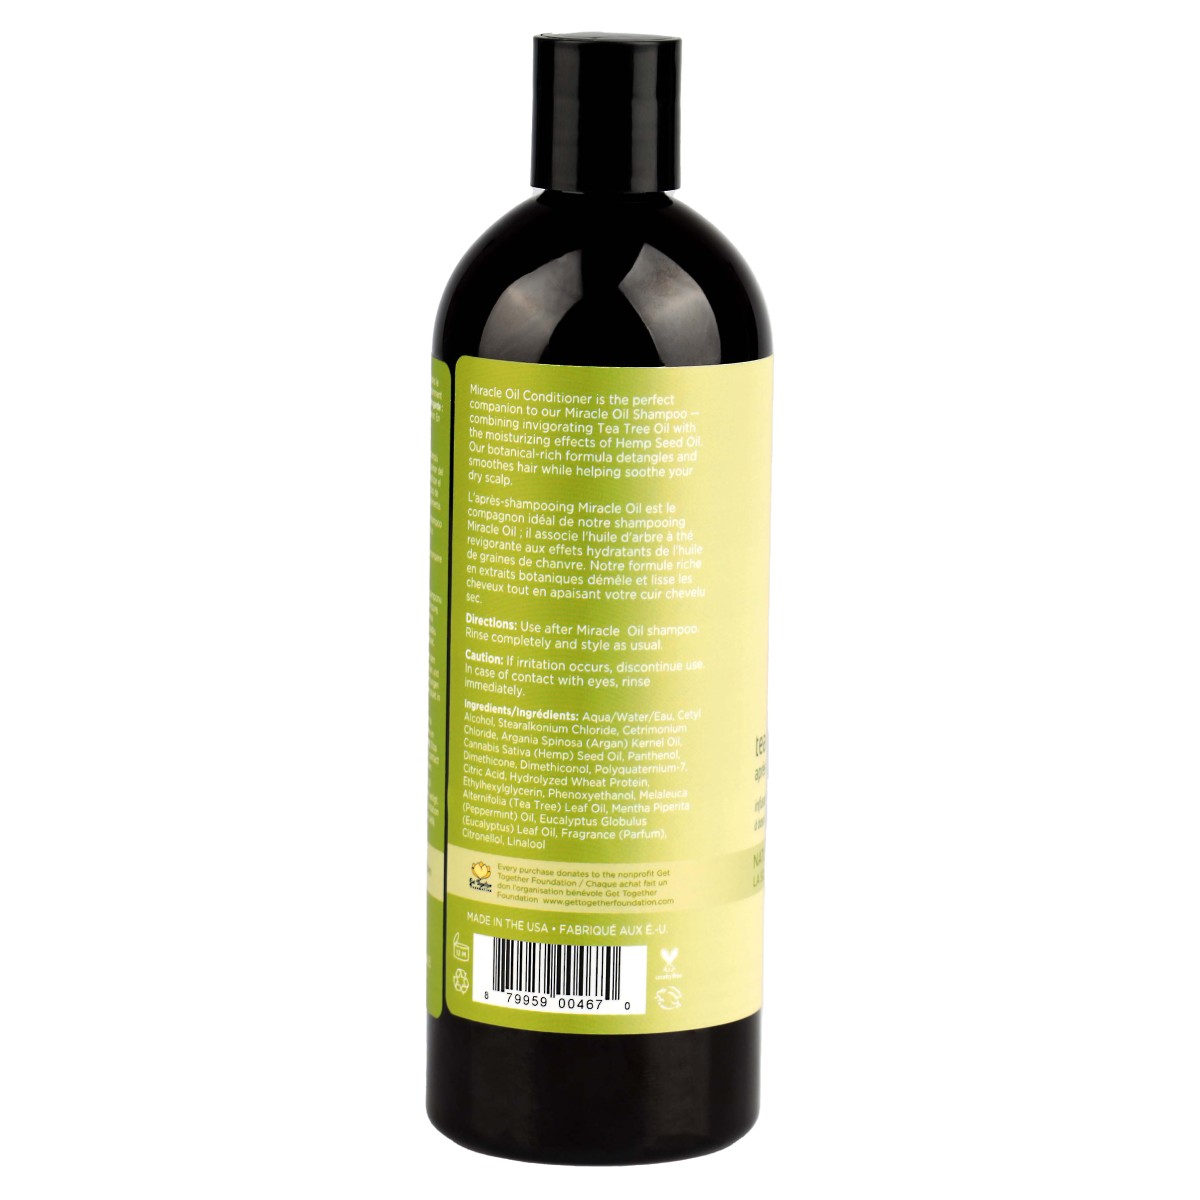  Hemp Seed Hand & Body Lotion, Nag Champa Scent - 7 Fl Oz -  Soothe Dry Skin - Argan Oil, Hemp Seed Oil - Light, Non-Greasy Formula -  Vegan & Cruelty